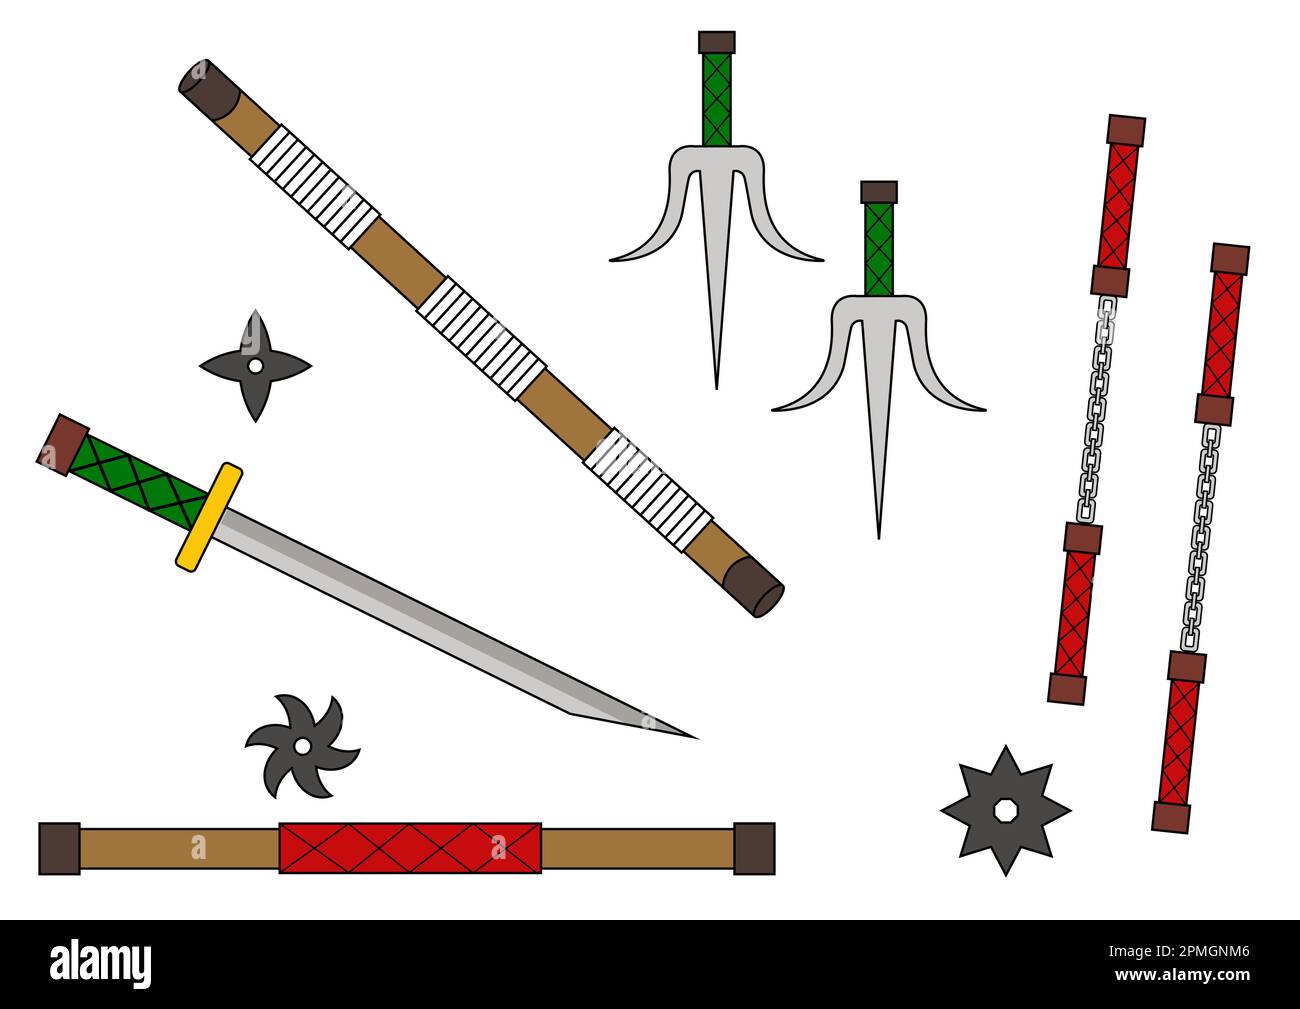 https://c8.alamy.com/comp/2PMGNM6/ninja-weapons-icons-set-shuriken-star-nunchaku-sword-katana-vector-illustration-of-cartoon-ninja-weapons-2PMGNM6.jpg